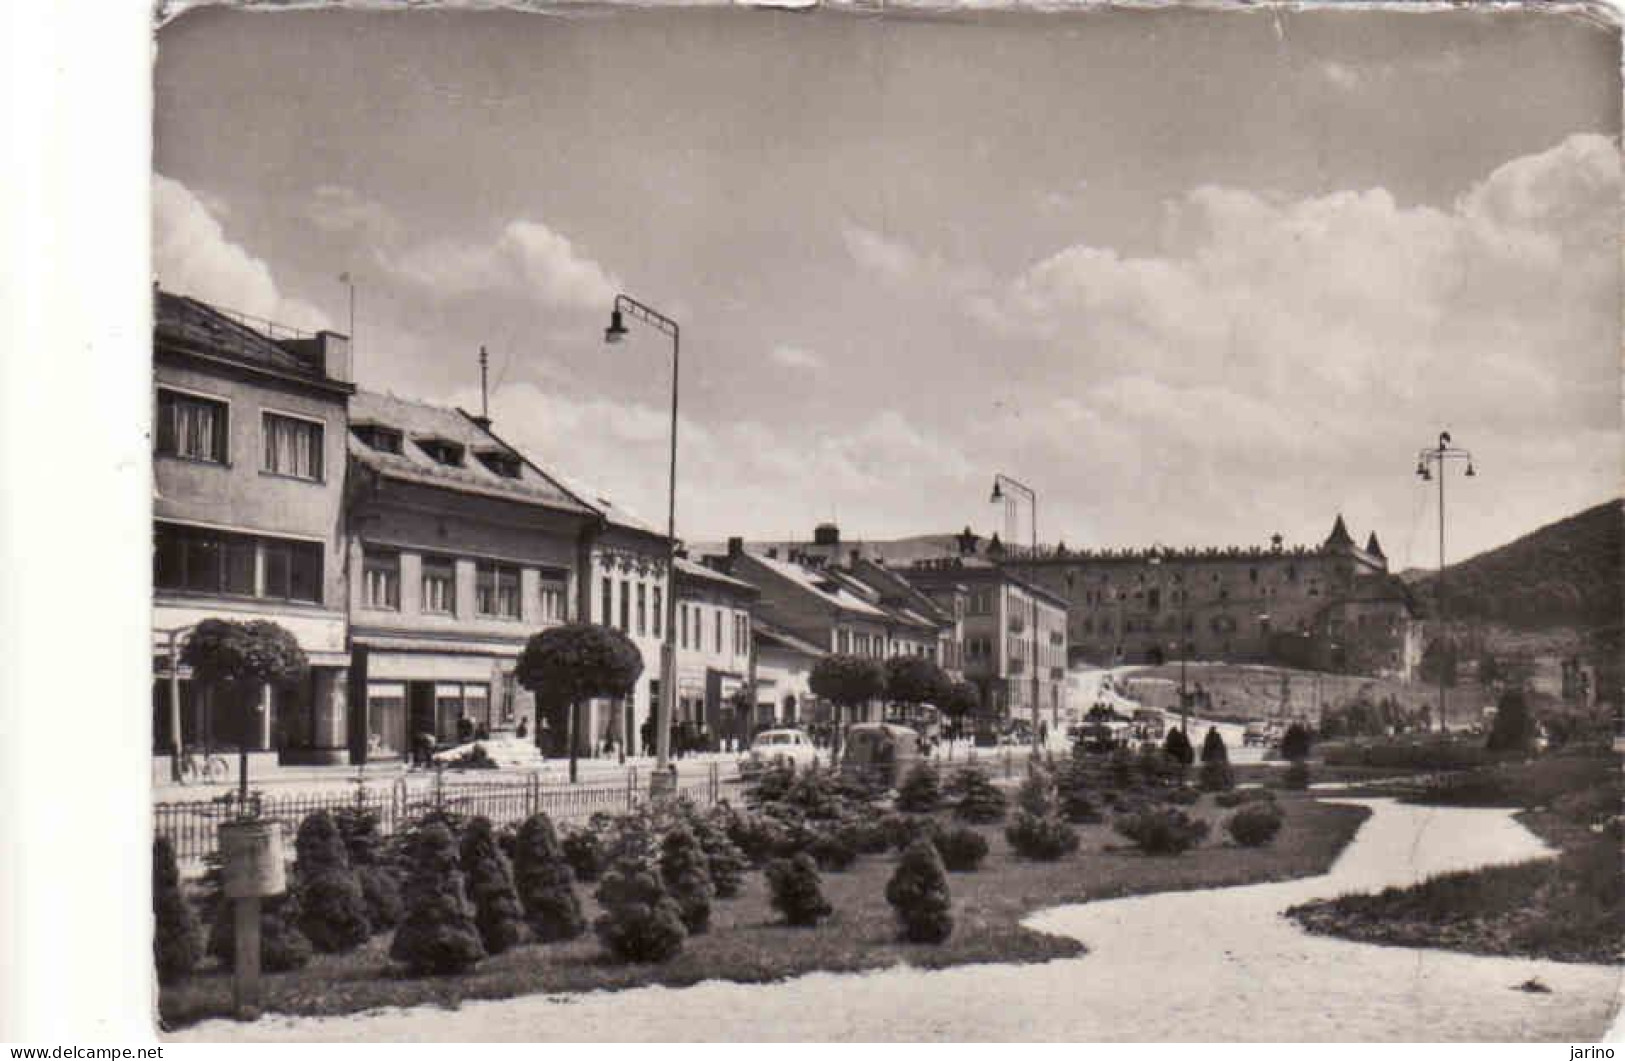 Slovakia, Zvolen, Used 1957 - Slovaquie